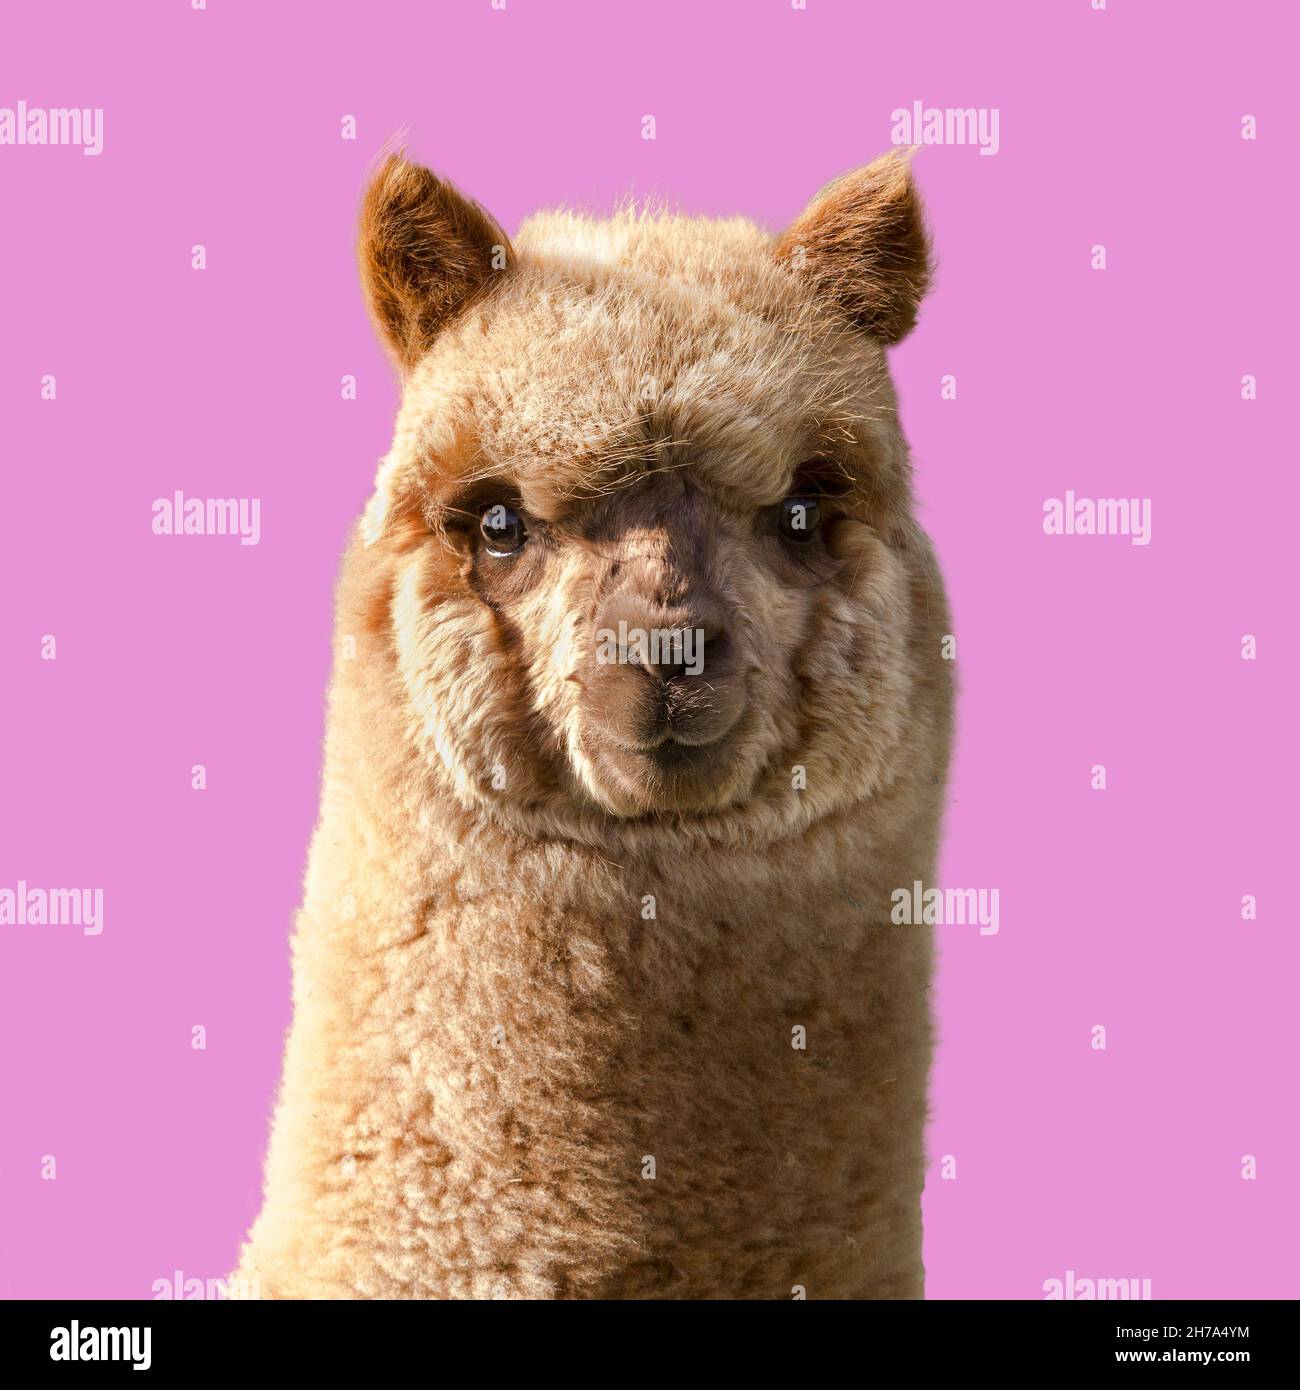 Cute young alpaca. Llama portrait on pink background. Stock Photo